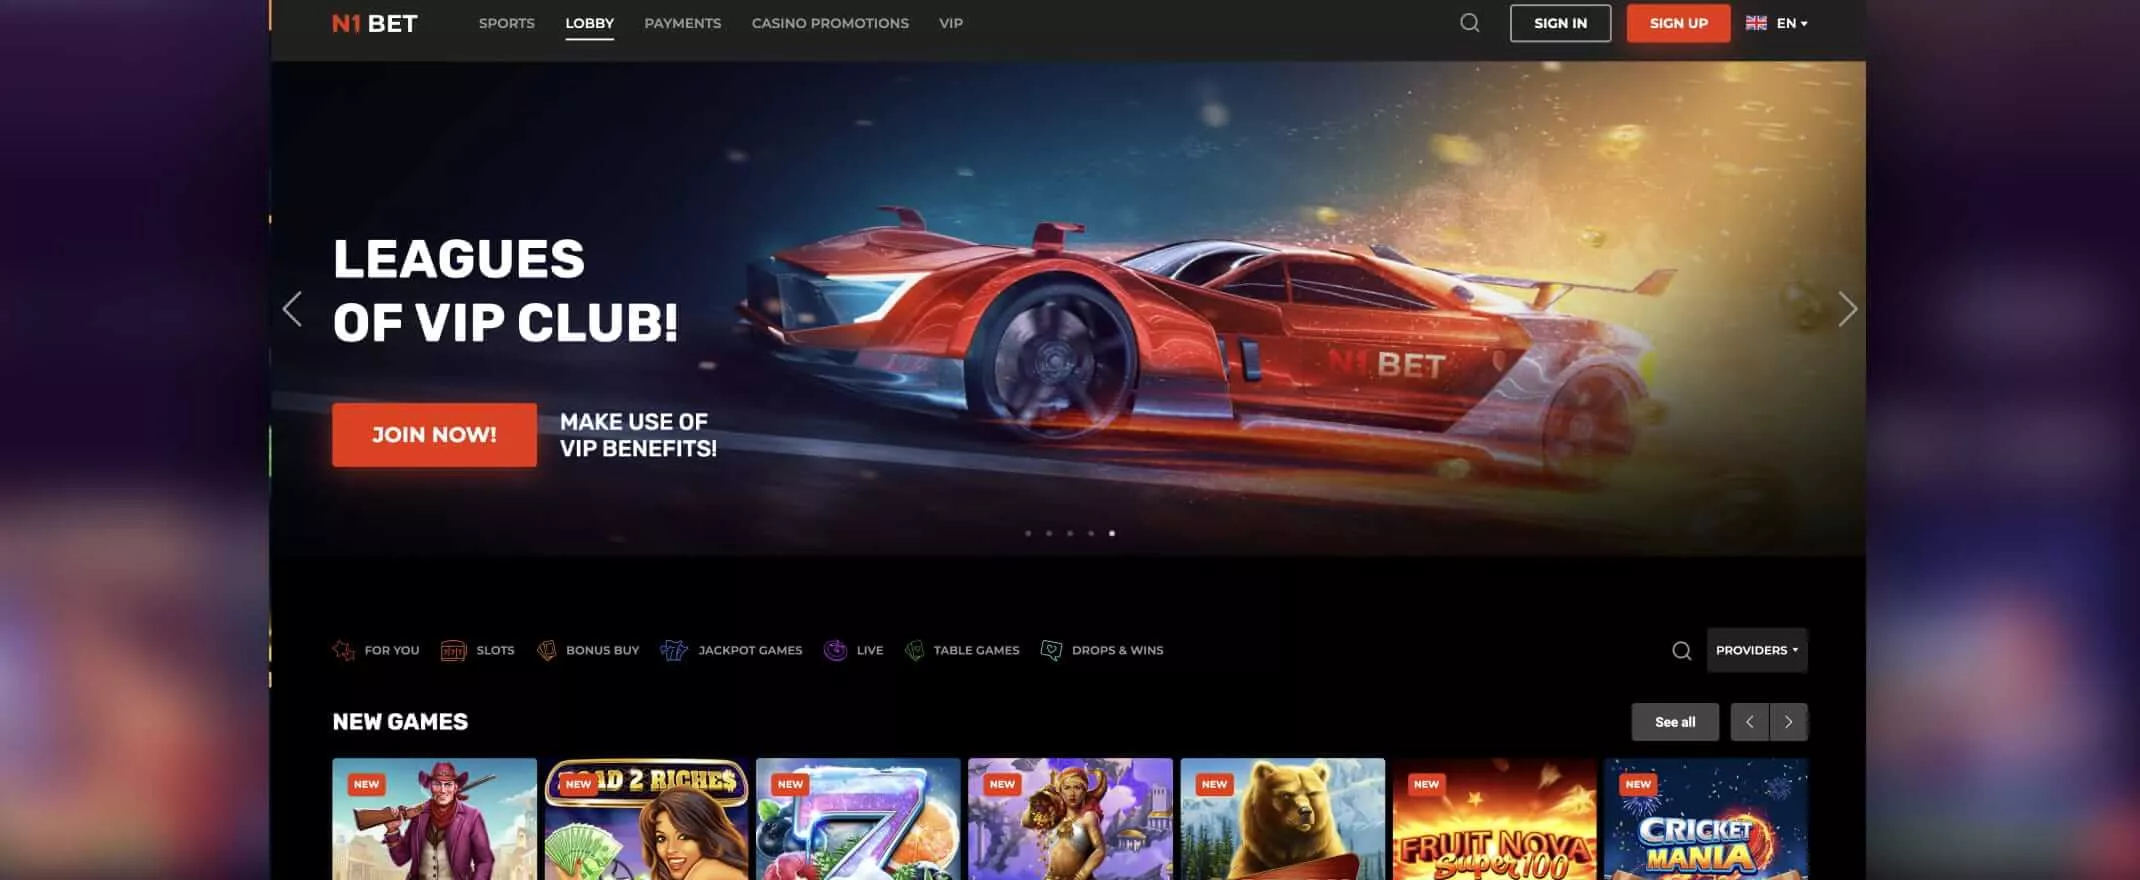 N1Bet casino homepage screenshot